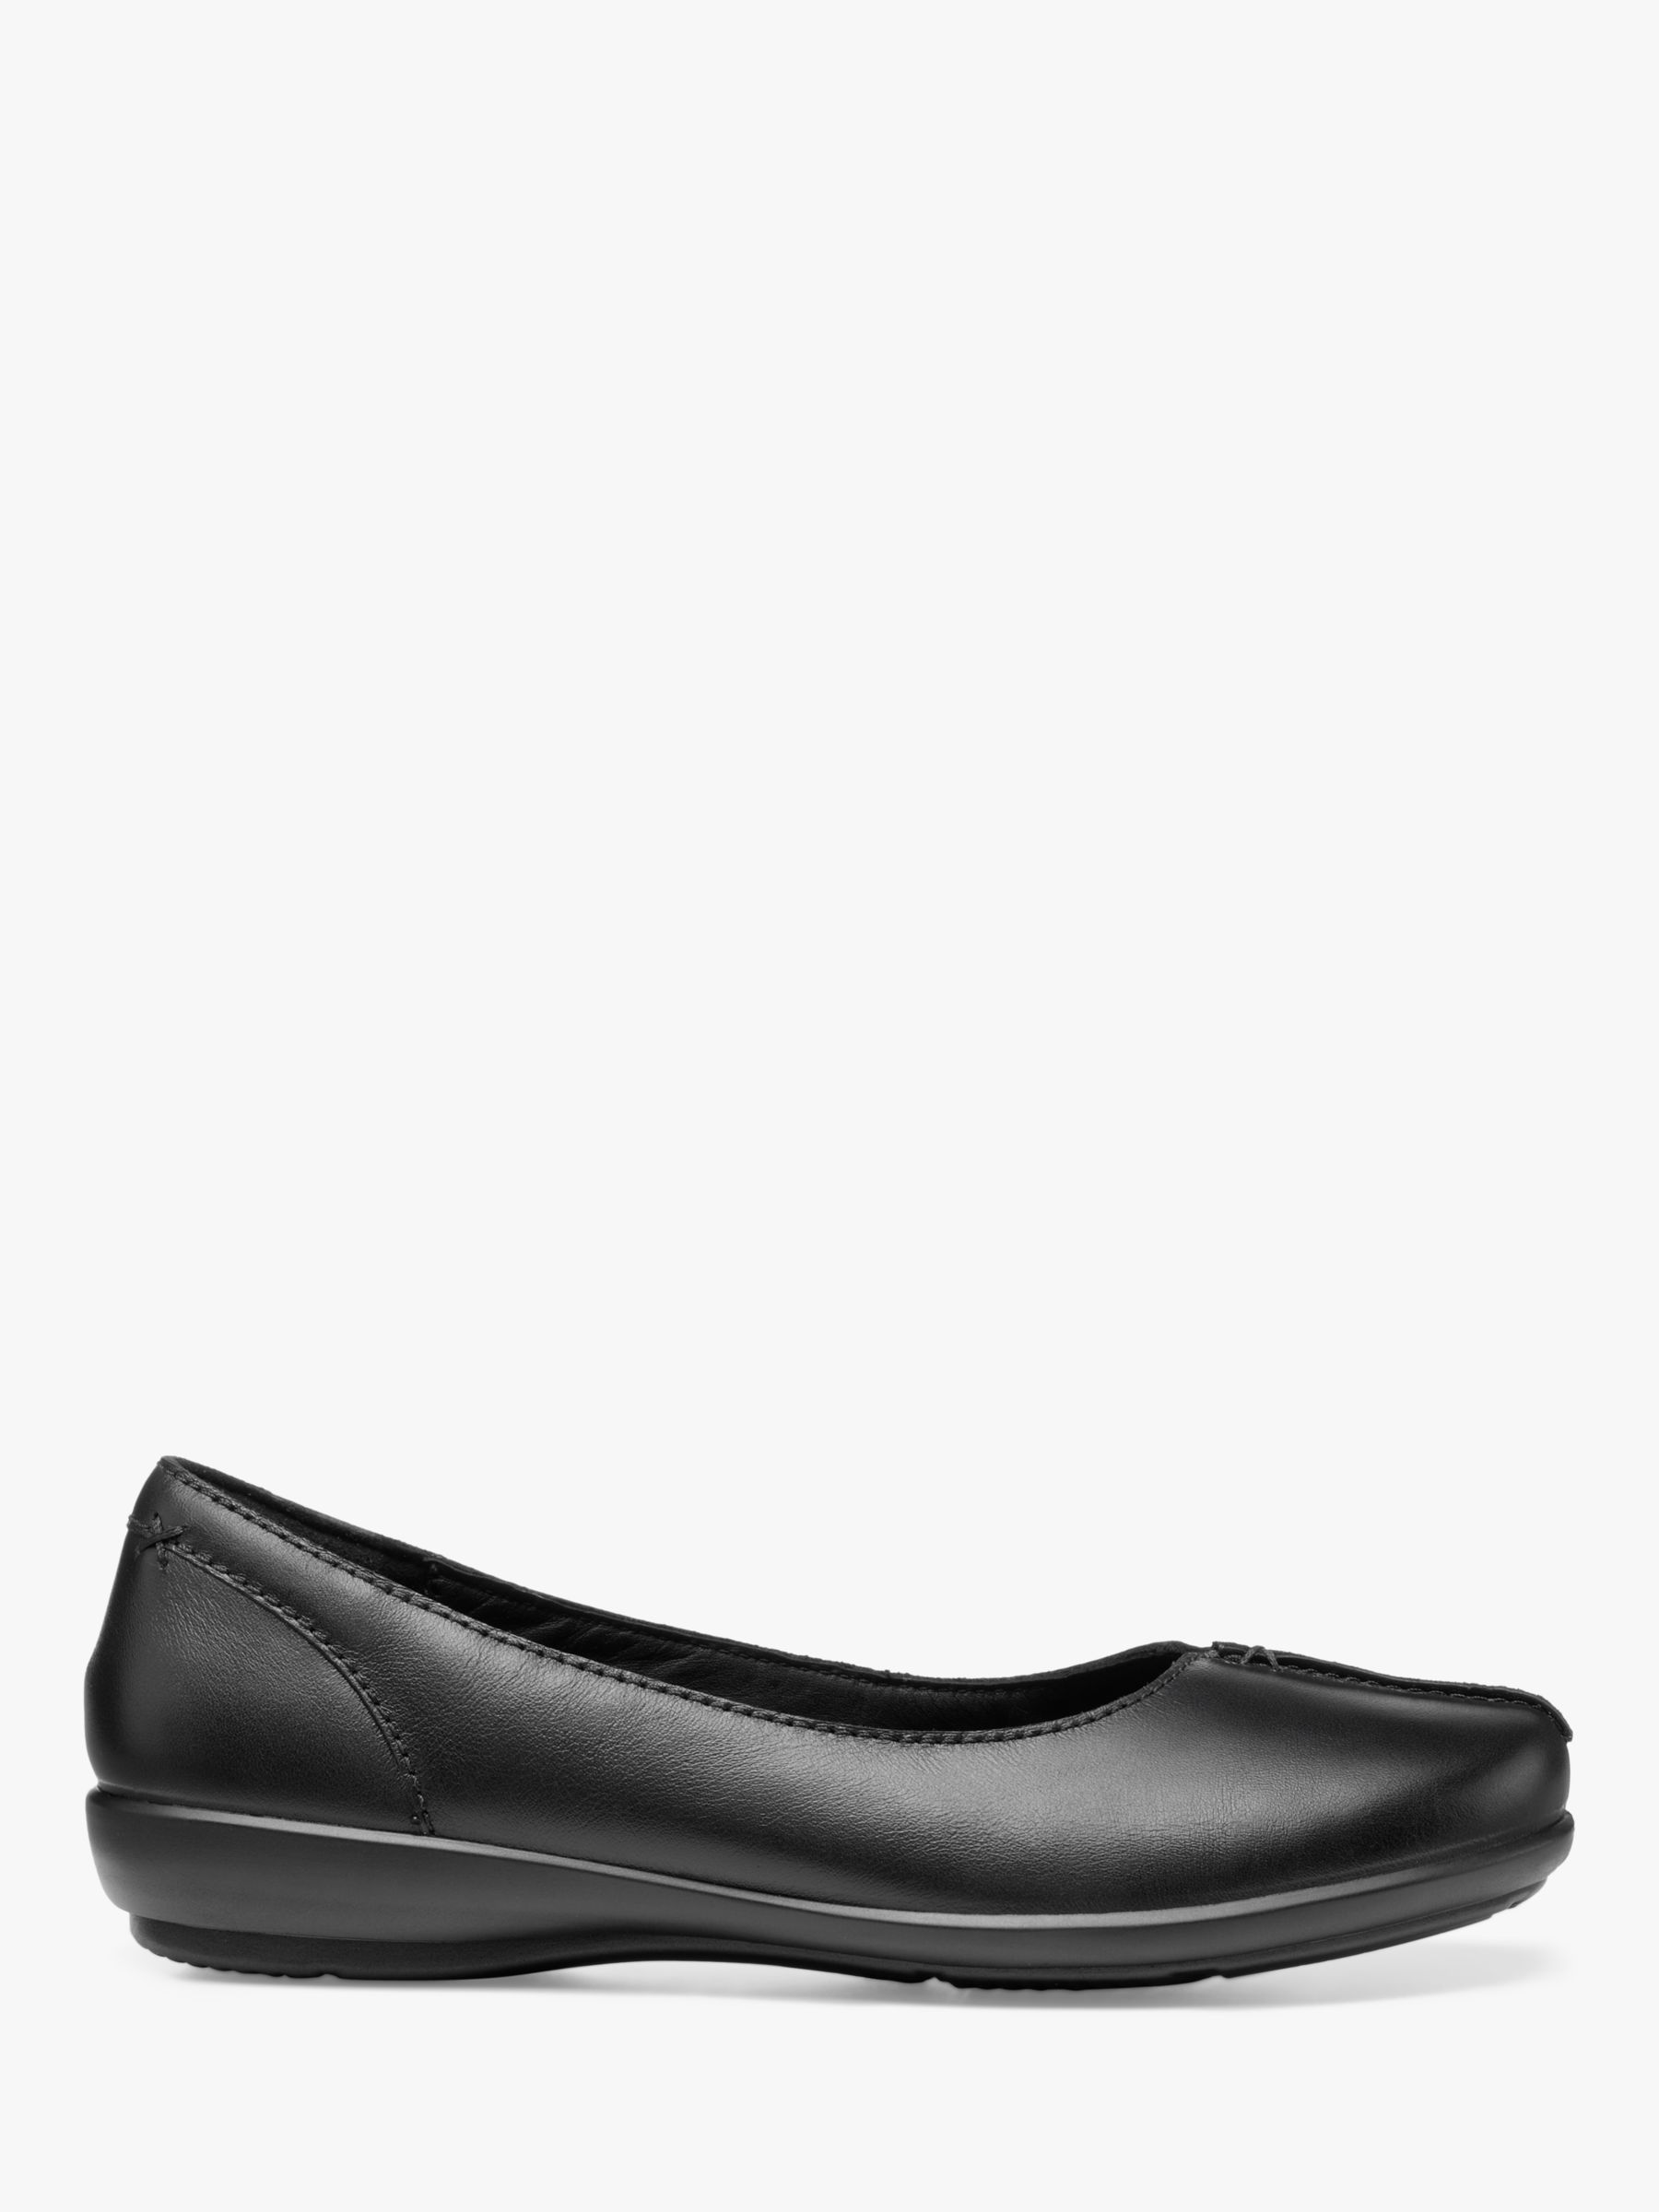 John Lewis Shoreditch Slip-on zapatos/Negro Uk5 Eur38 Nuevo con etiquetas